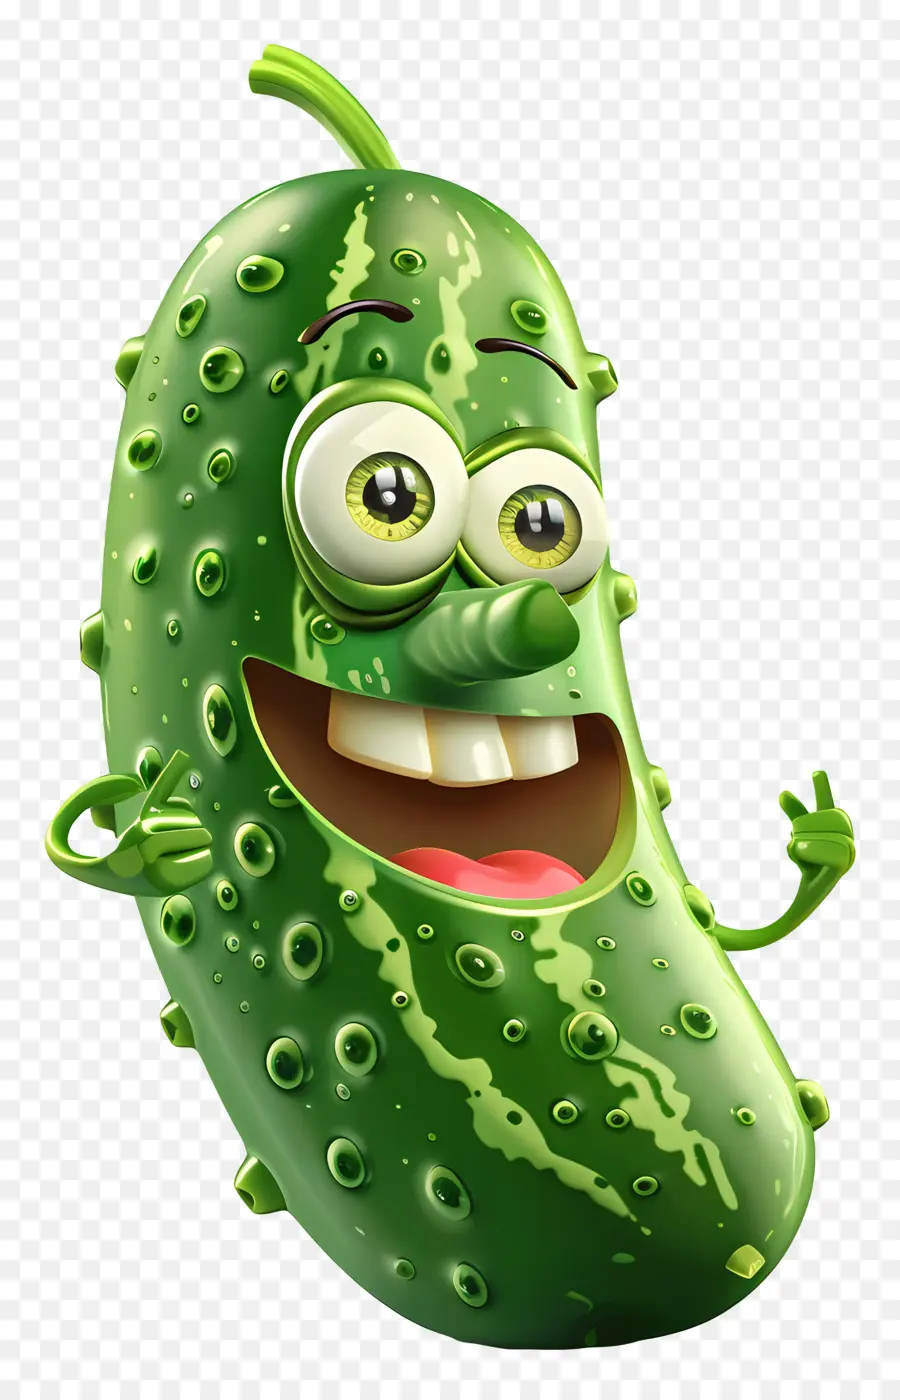 3d cartoon vegetable cartoon cucumber playful design green cucumber smiling vegetable